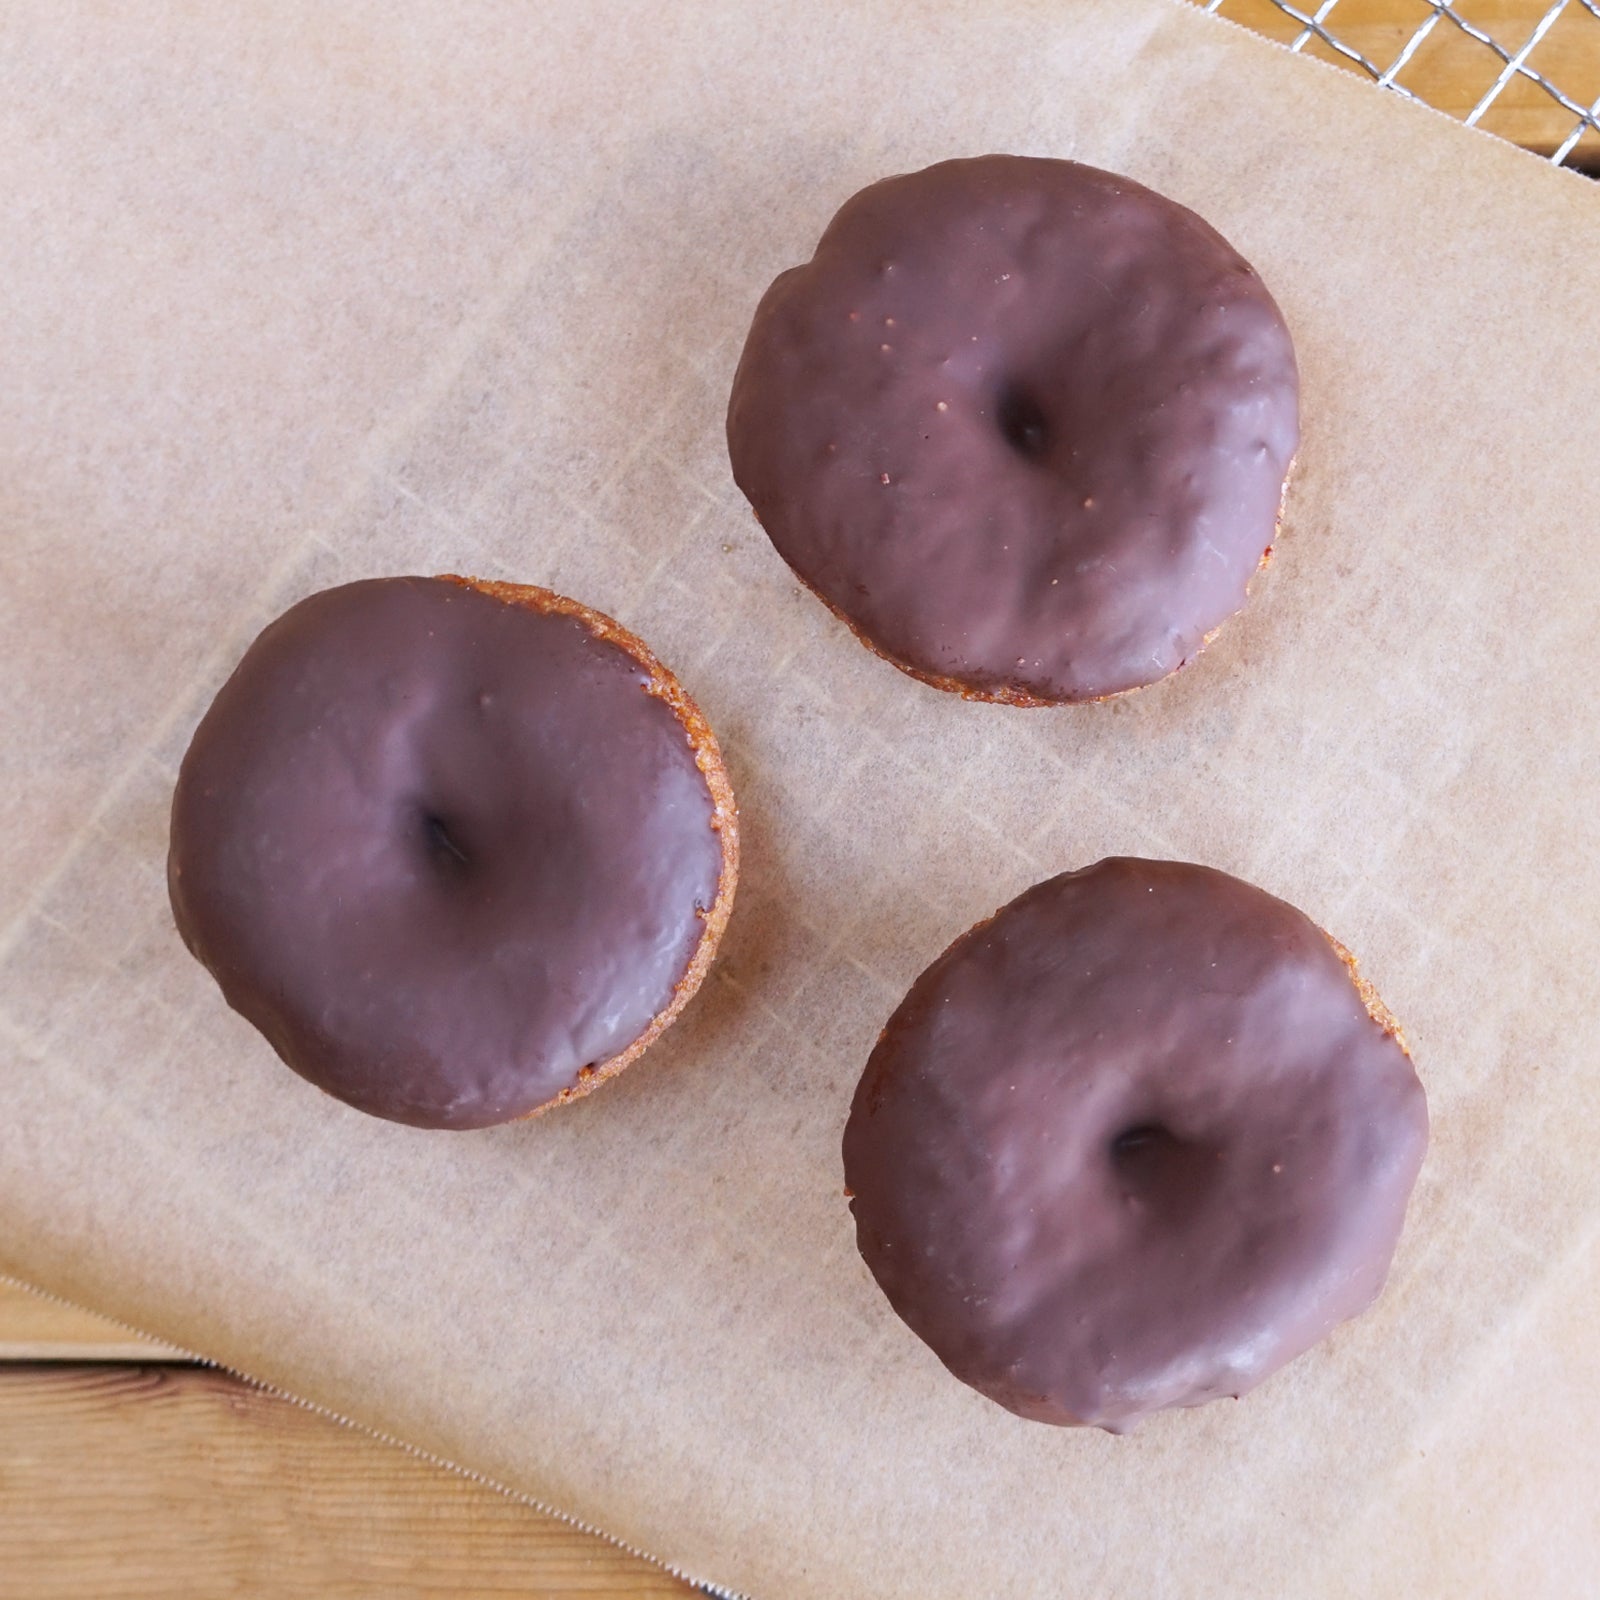 All-Natural Artisan Dairy-Free Egg-Free Chocolate Donuts (3pc) - Horizon Farms